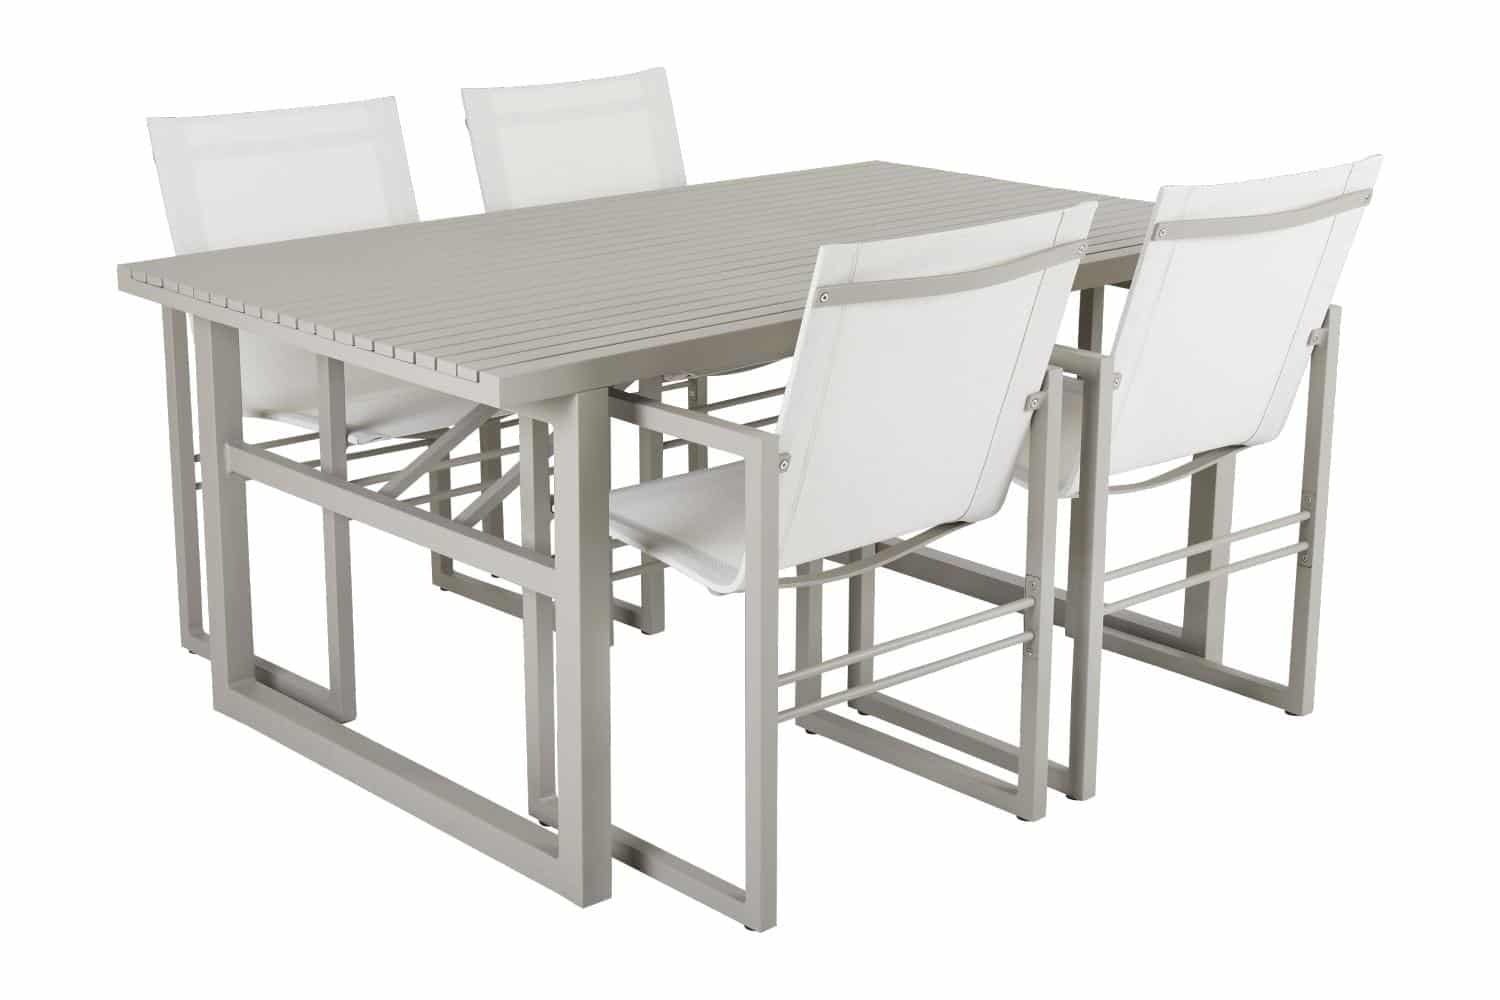 Brafab Vevi Matbord khaki tillverkat i beige/khakifärgad underhållsfri aluminium. Med 4 st Vevi matstolar khaki.